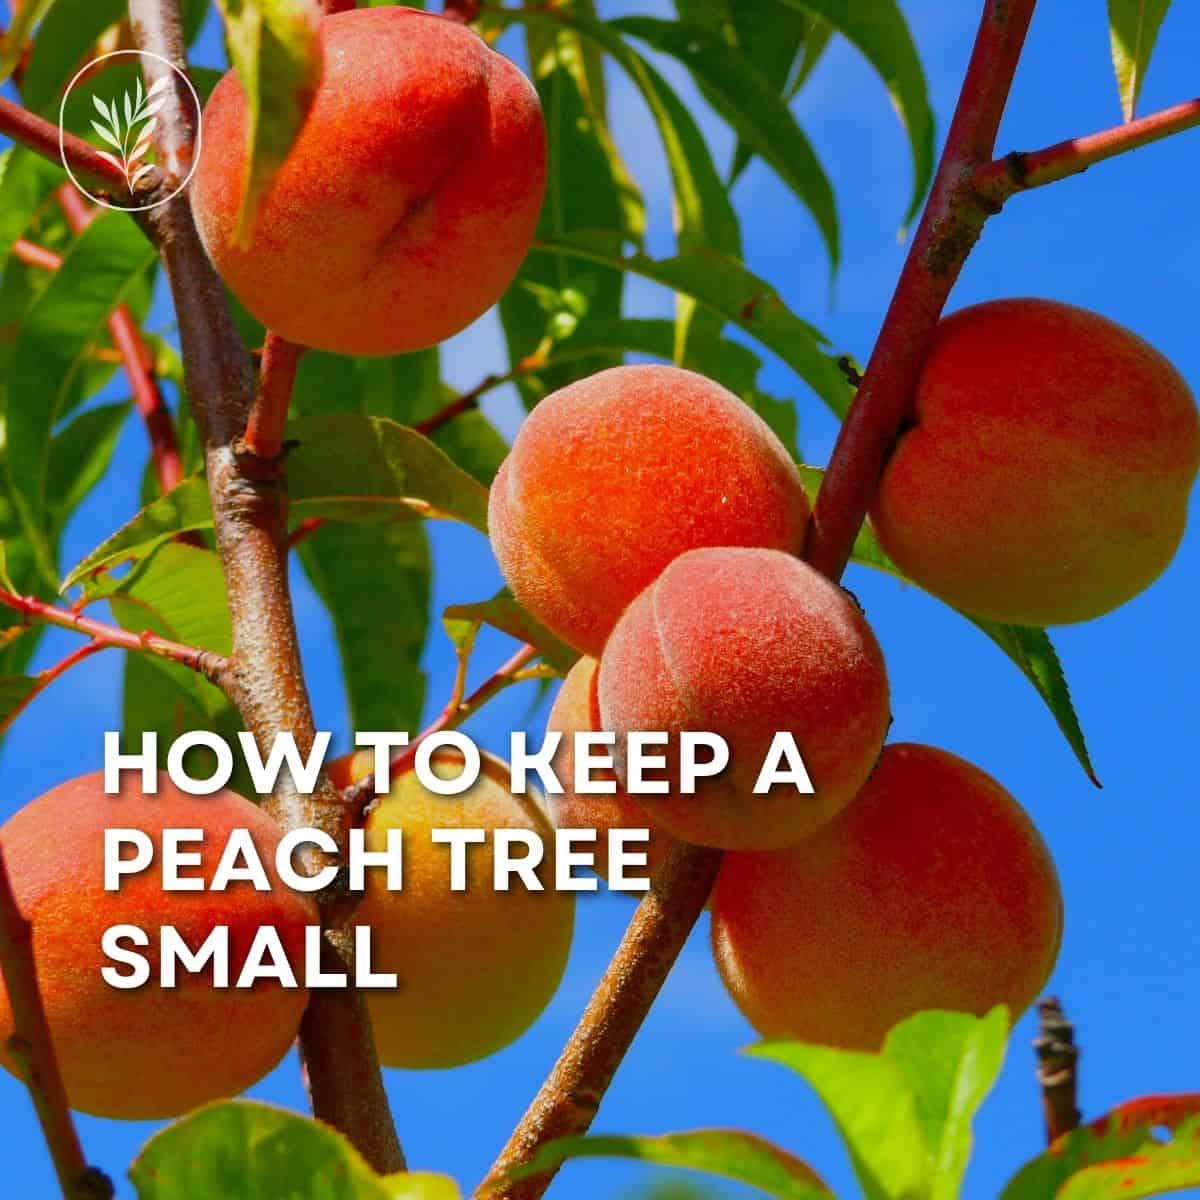 How to keep a peach tree small - instagram via @home4theharvest